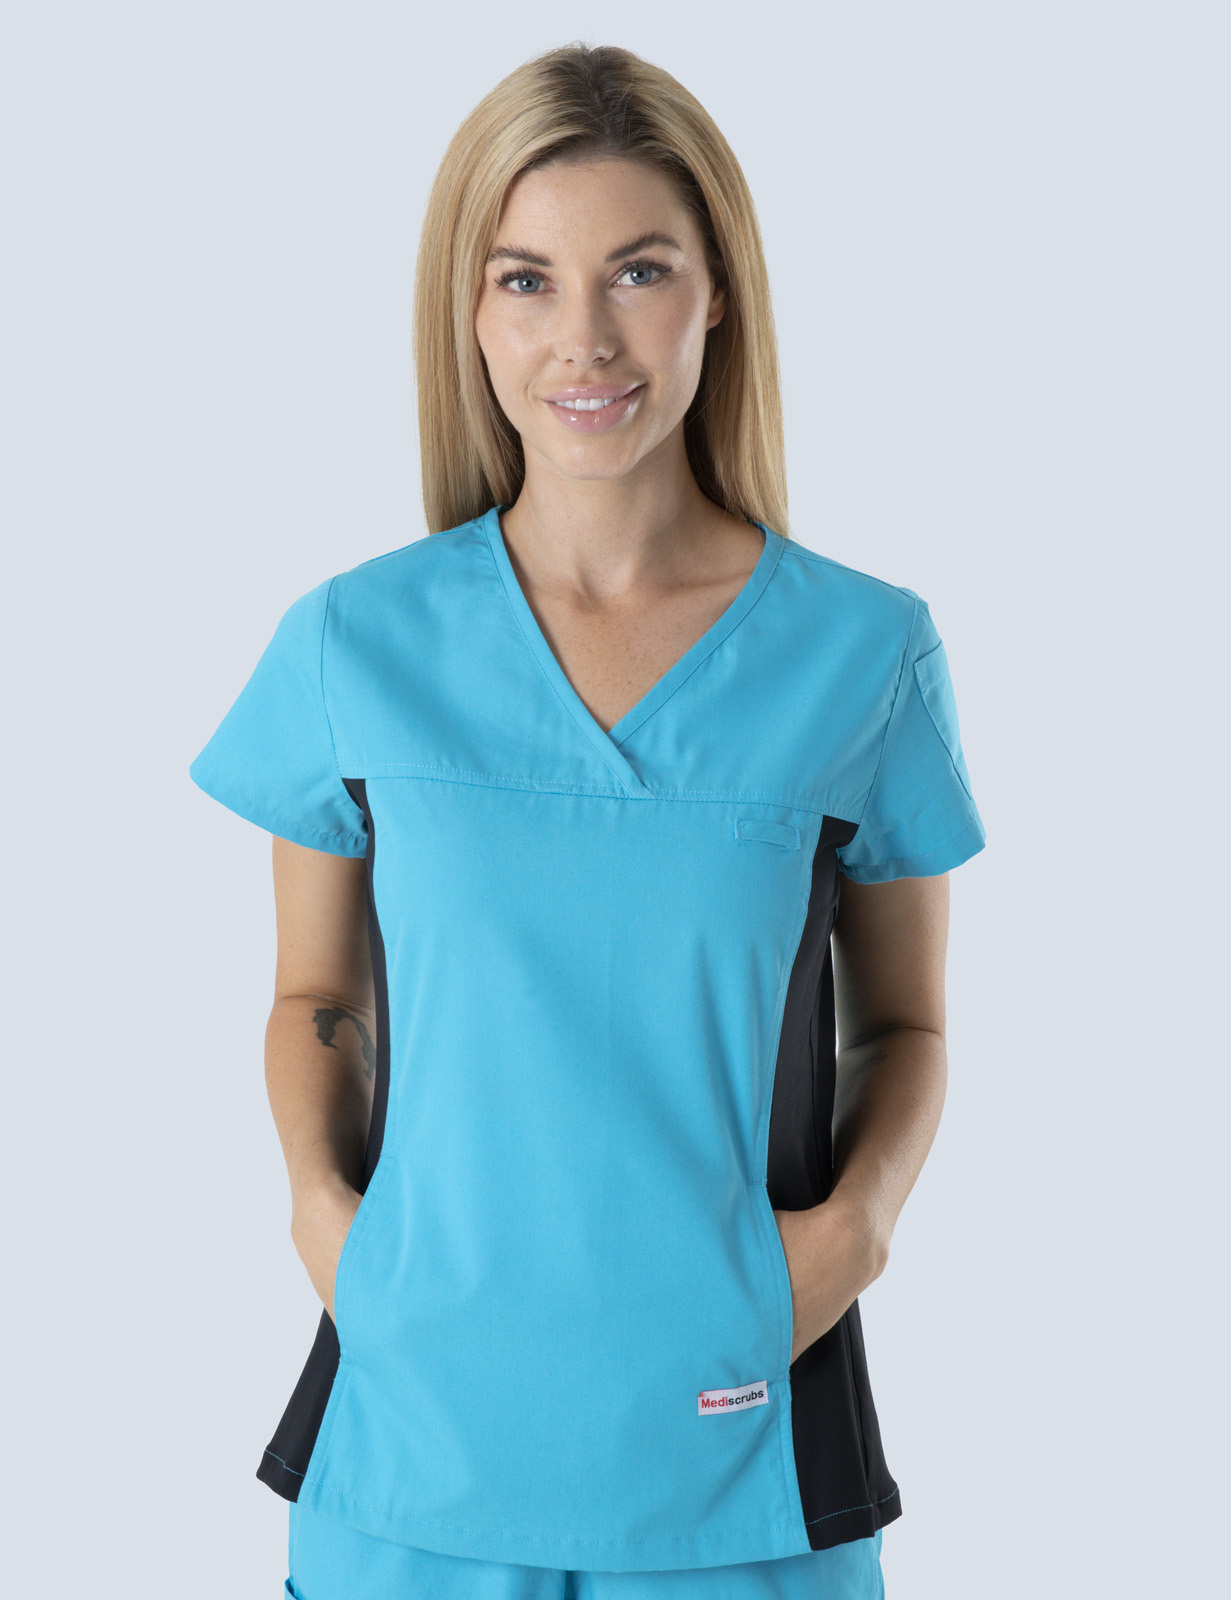 Ashmore Retreat Registered Nurse Top Only Bundle (Women's Fit Spandex in Aqua incl Logo) 